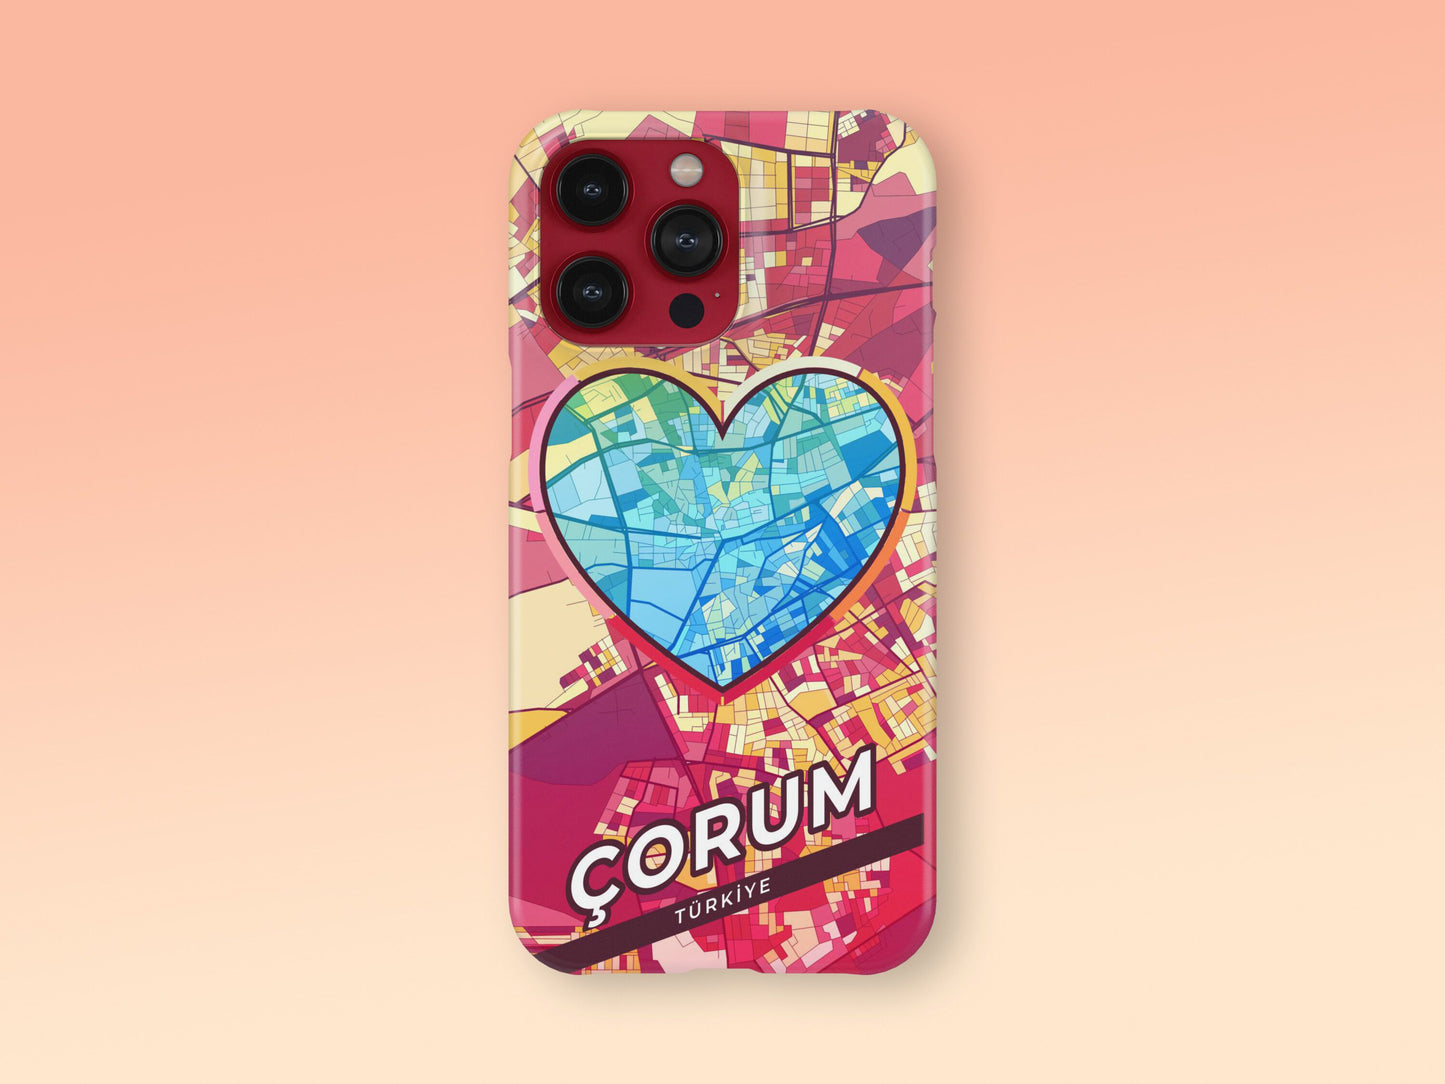 Çorum Turkey slim phone case with colorful icon. Birthday, wedding or housewarming gift. Couple match cases. 2